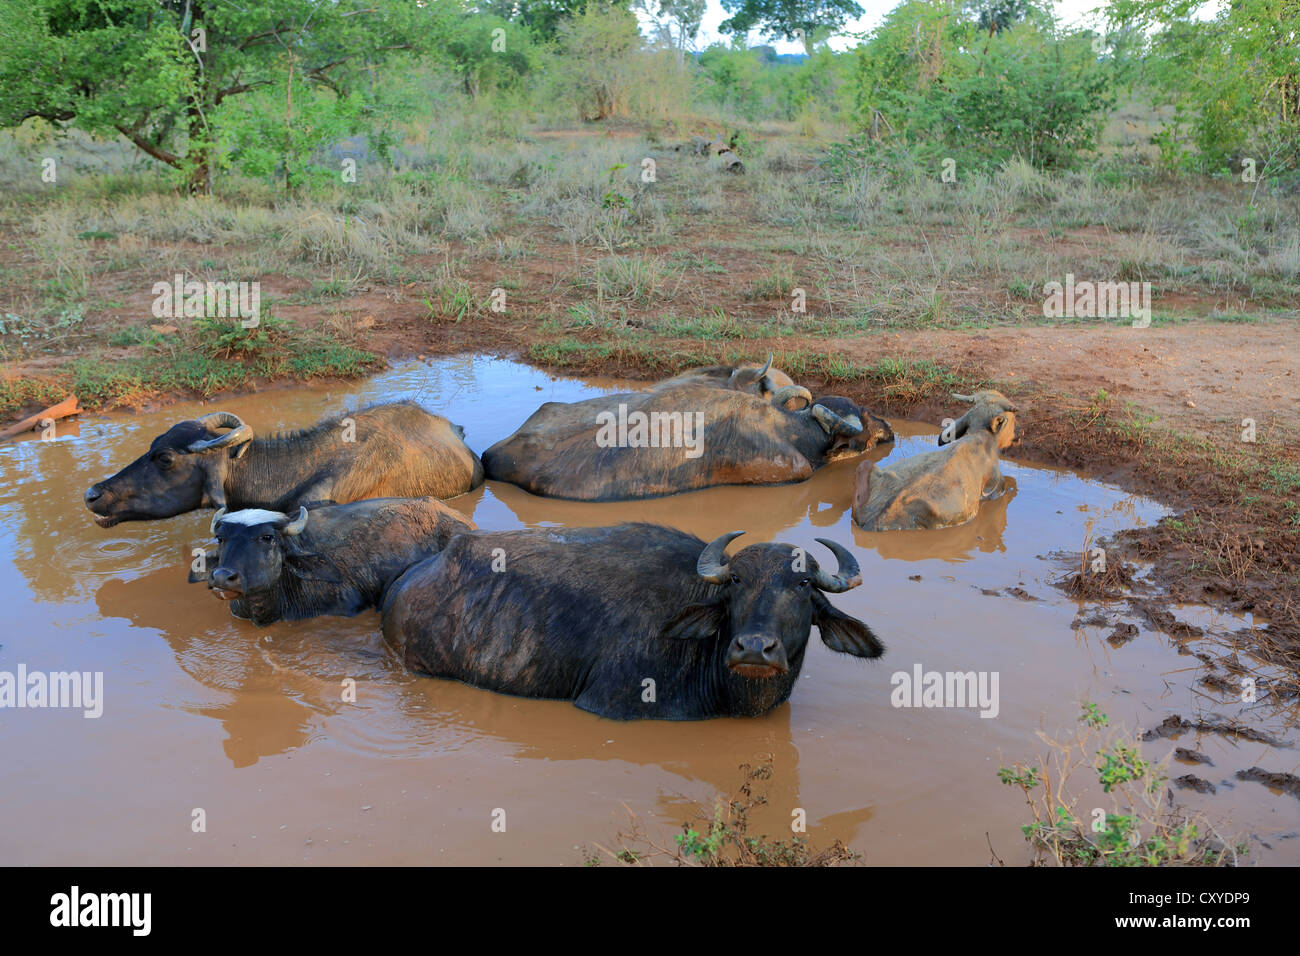 Water buffaloes bathing in a waterhole in Uda Walawe National Park, Sri Lanka. Stock Photo